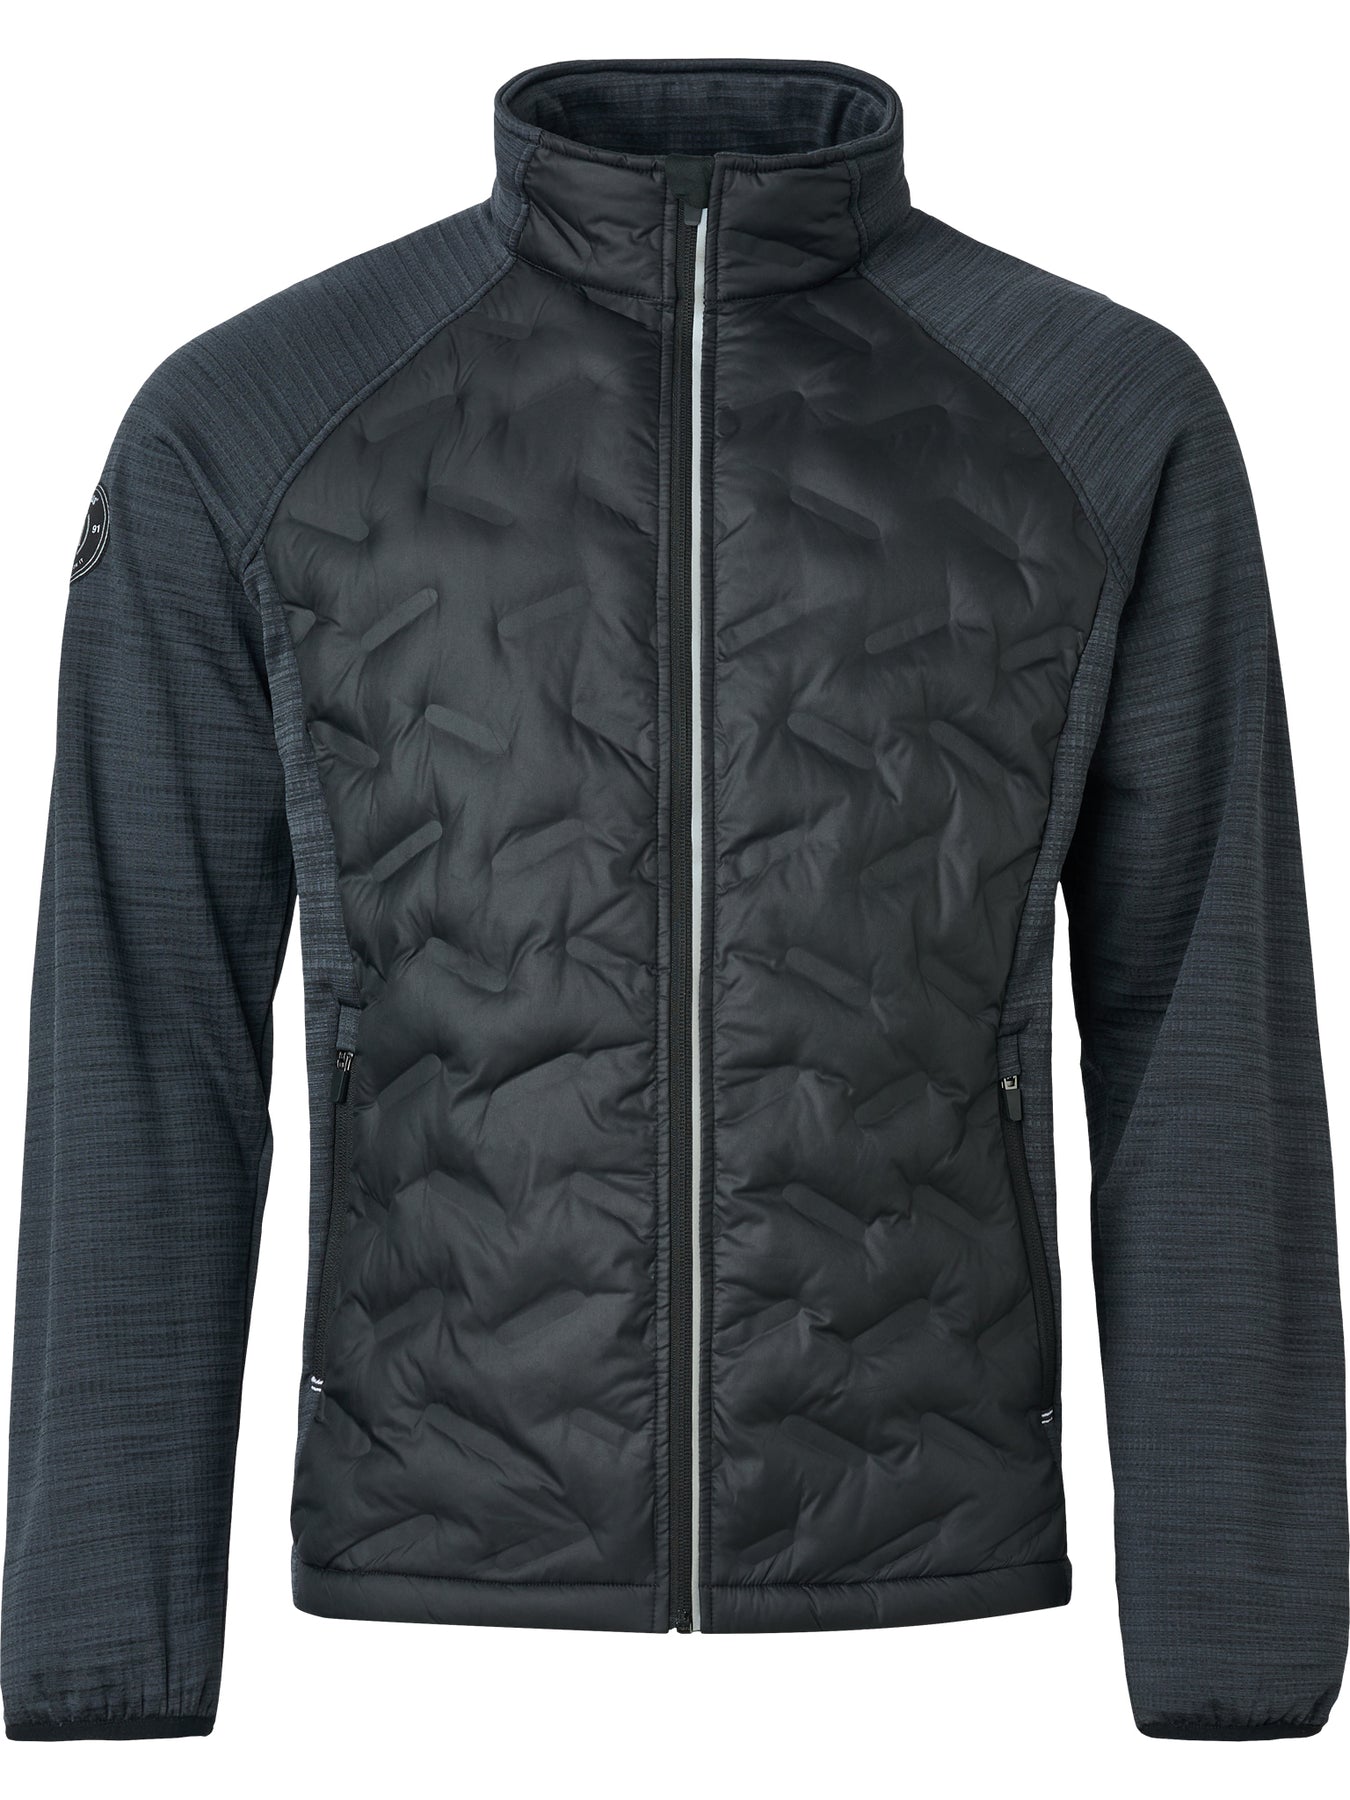 Abacus Sports Wear: Men’s High-Performance Hybrid Jacket – Elgin